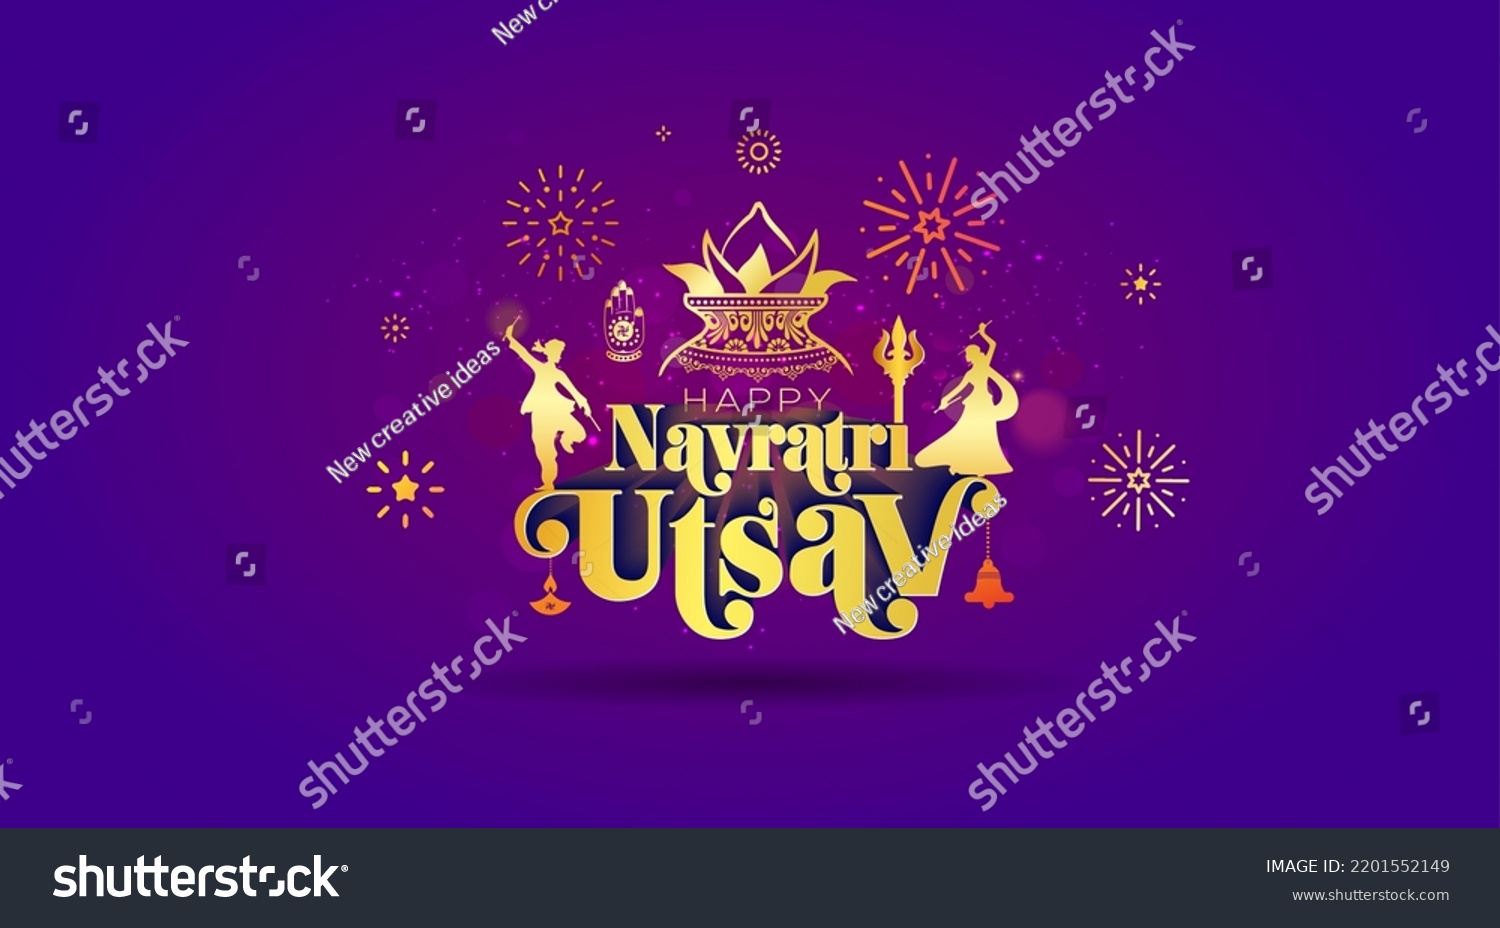 SVG of Greeting card for Navratri festival. Kalash puja and navratri utsav background with dandiya dance. svg